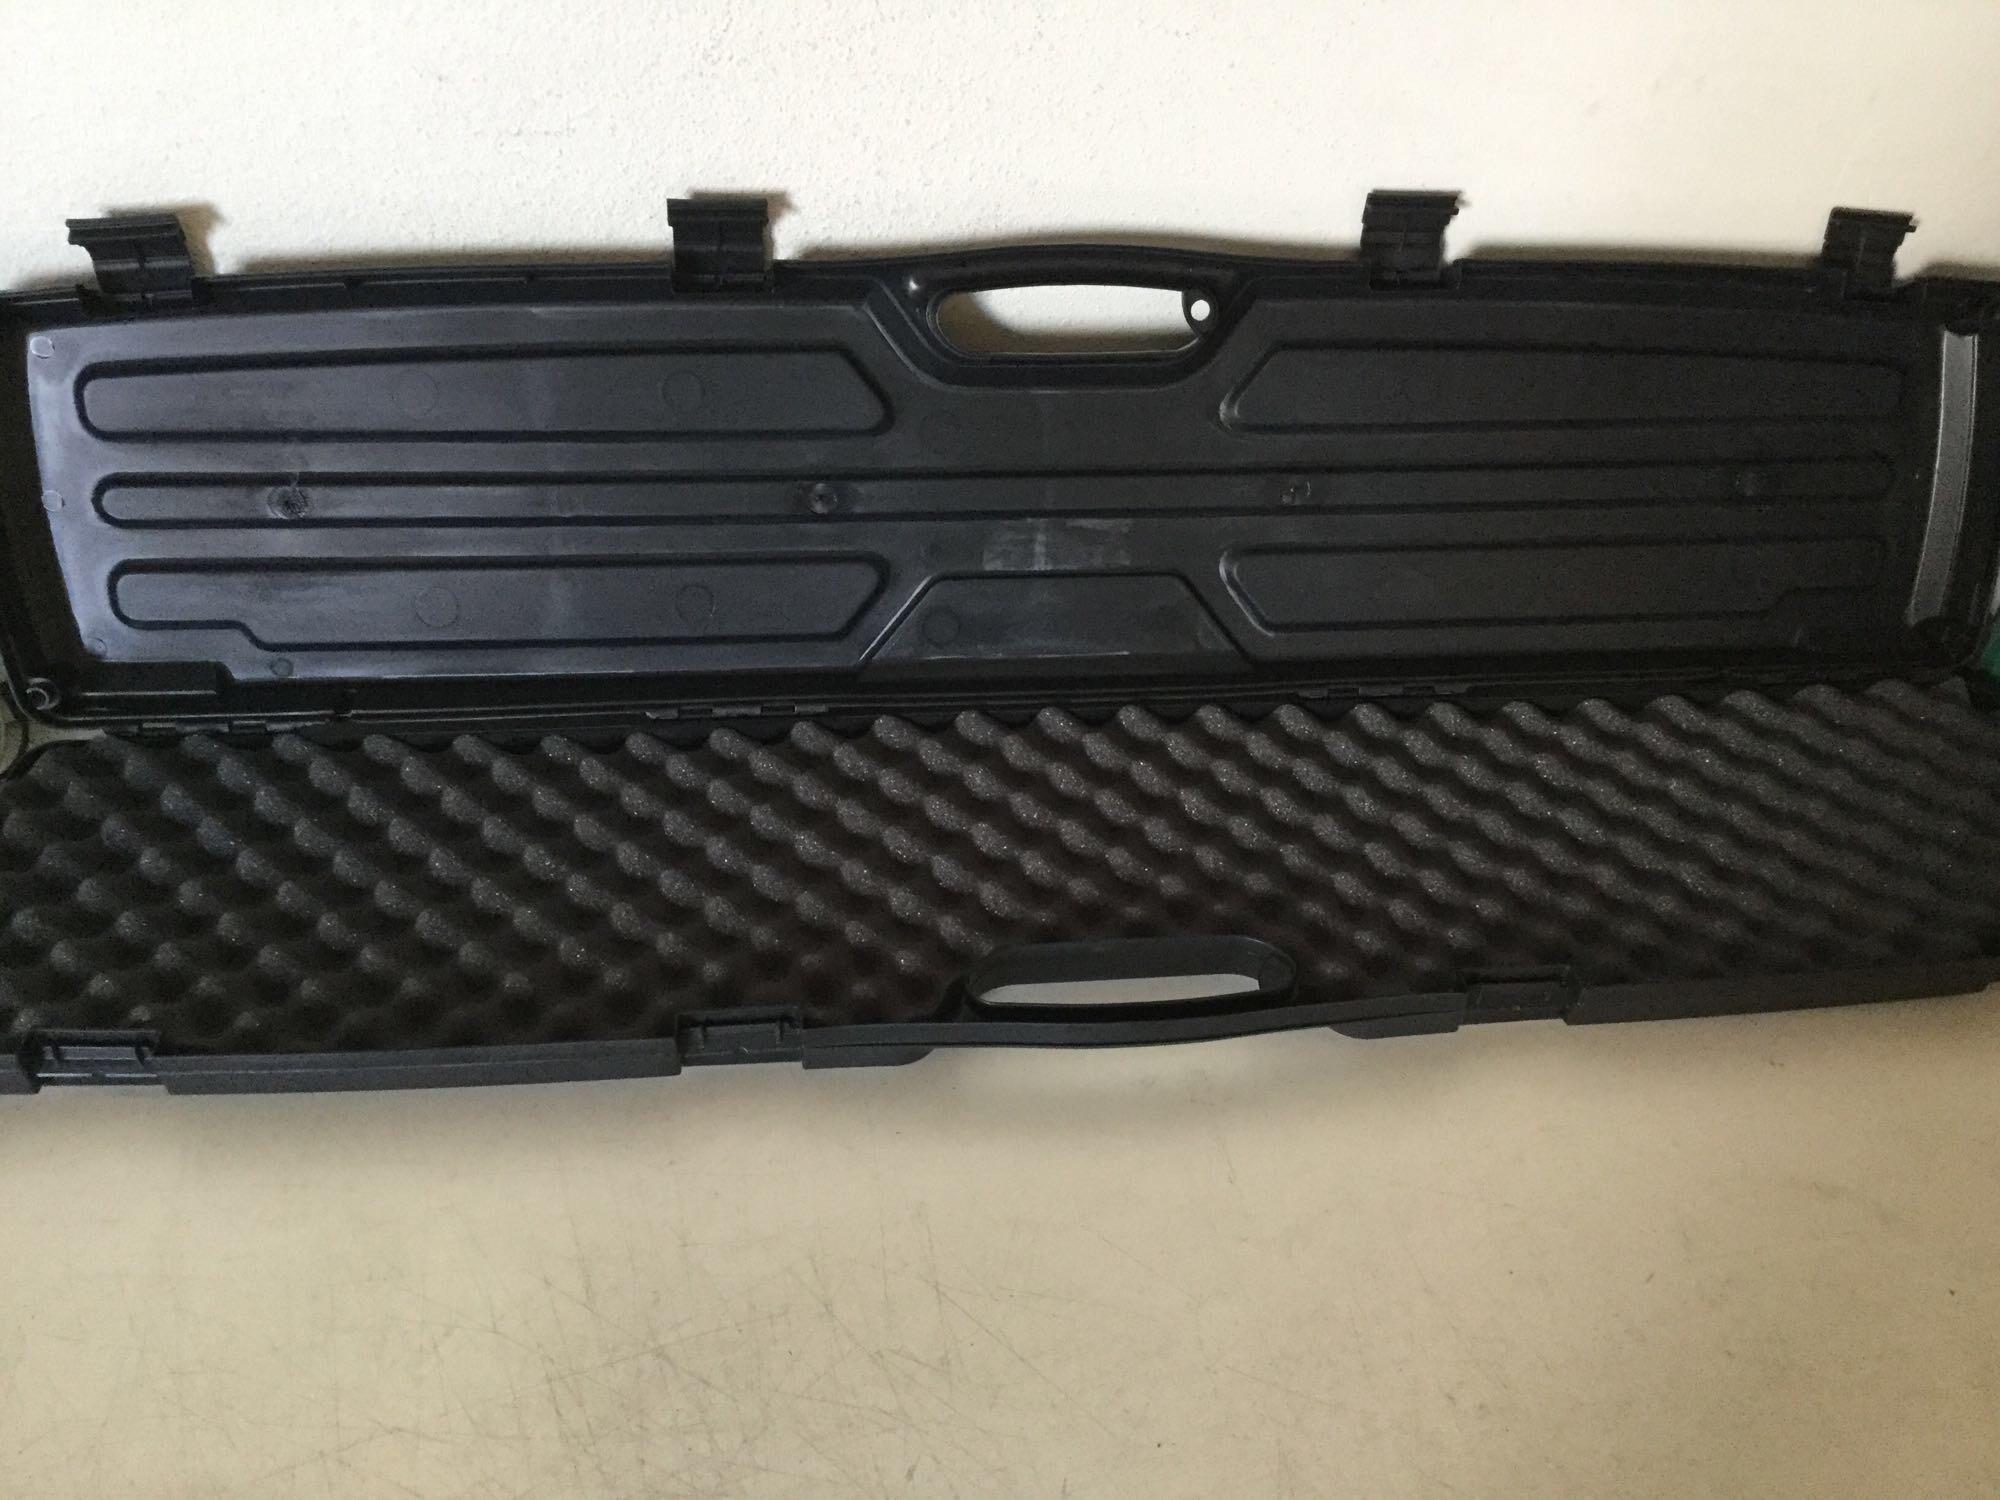 PLANO Gun Guard SE Single Rifle Case, Black -$50.99 MSRP